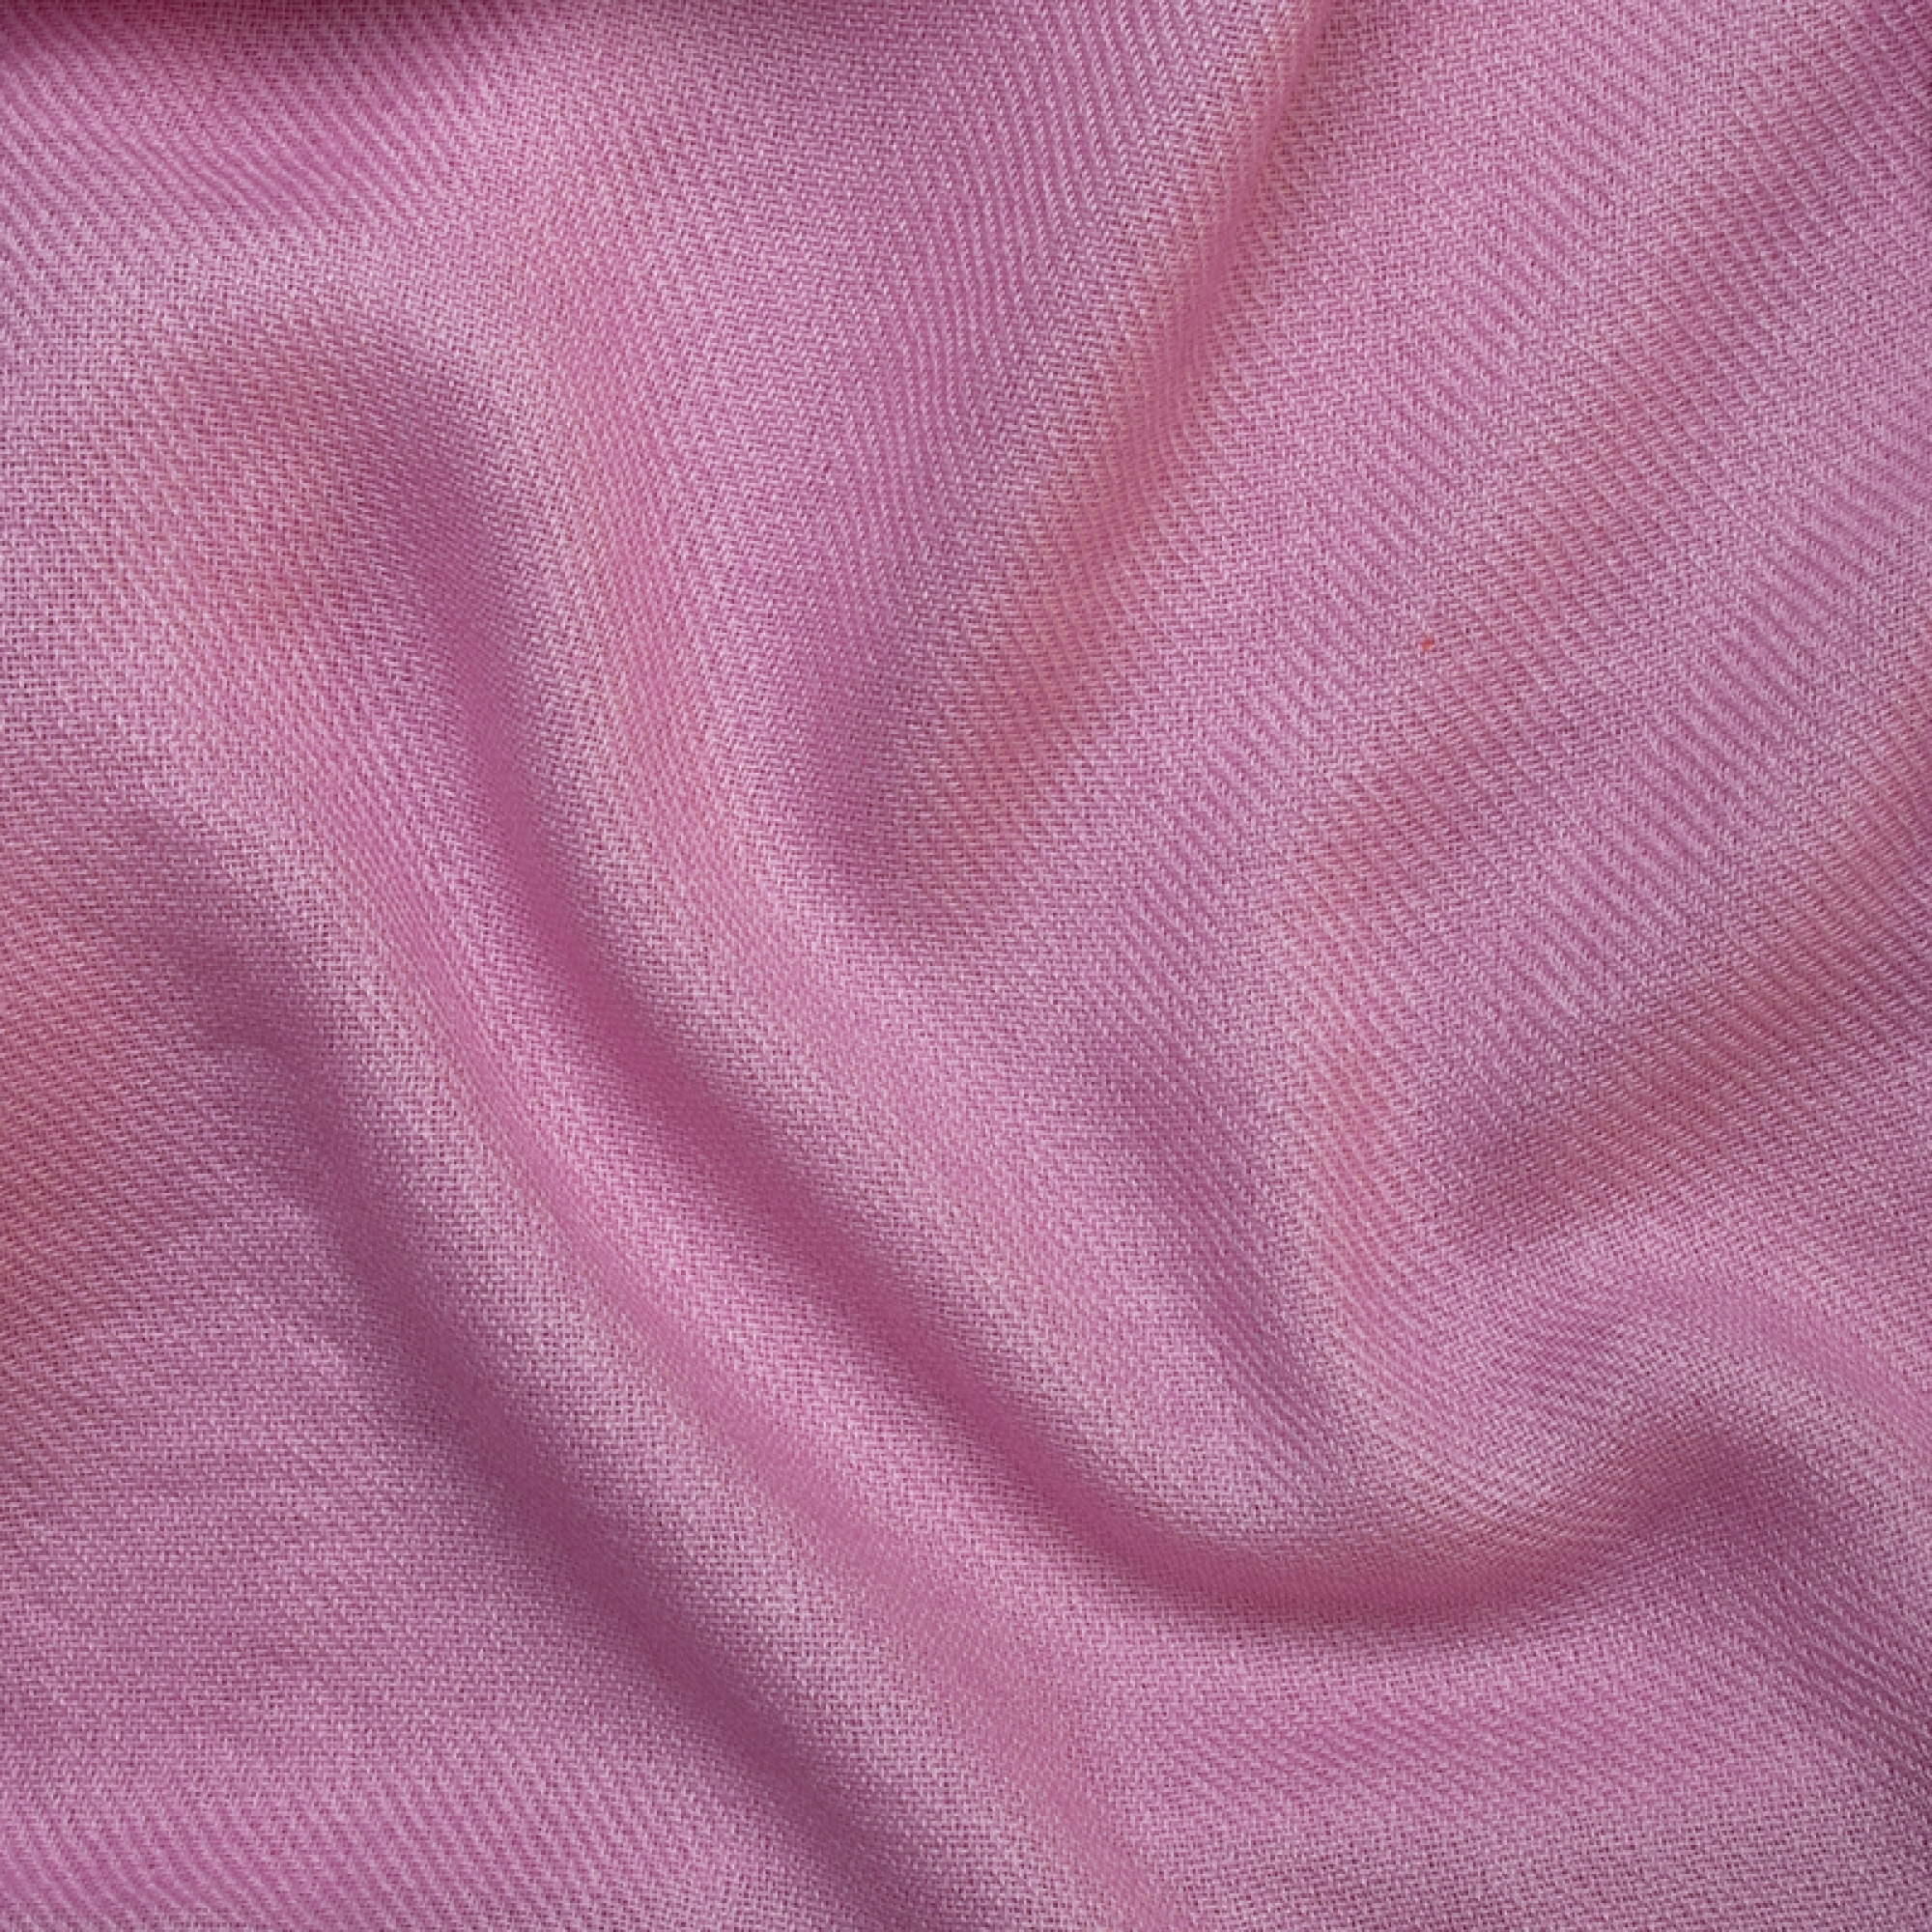 Cashmere ladies cocooning toodoo plain l 220 x 220 pink lavender 220x220cm